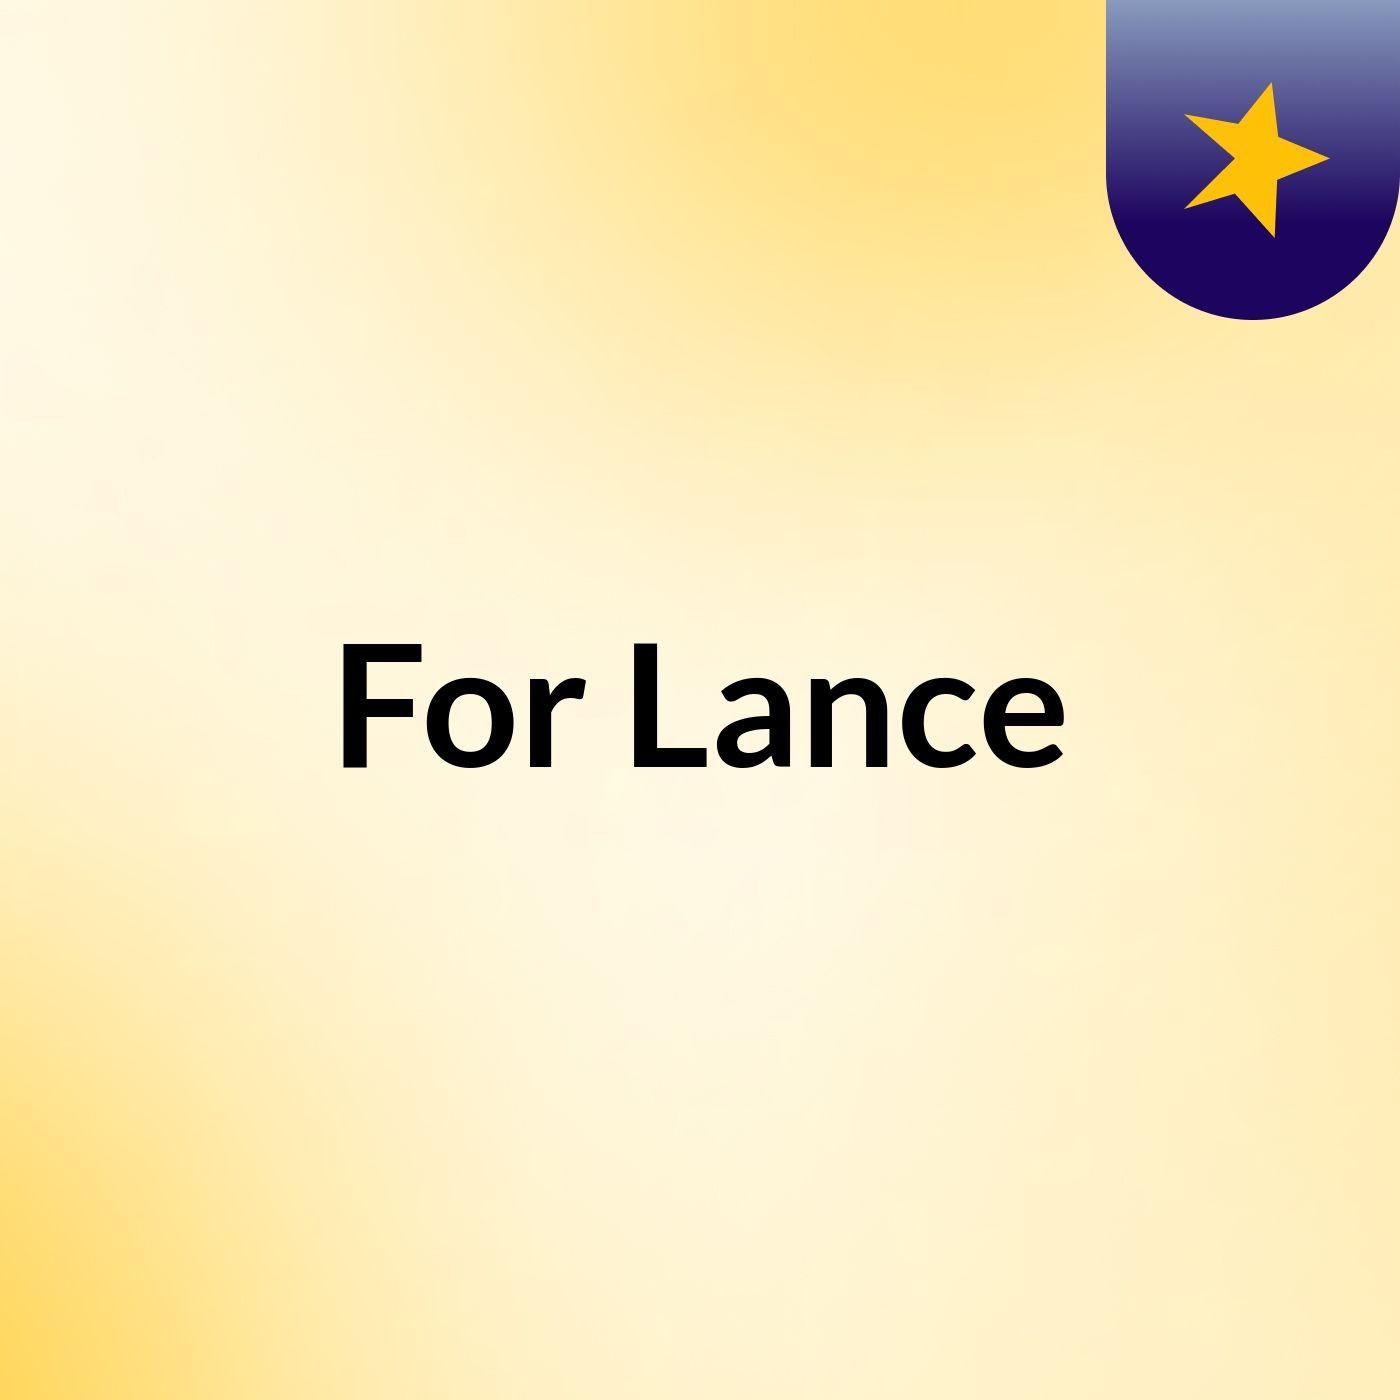 For Lance